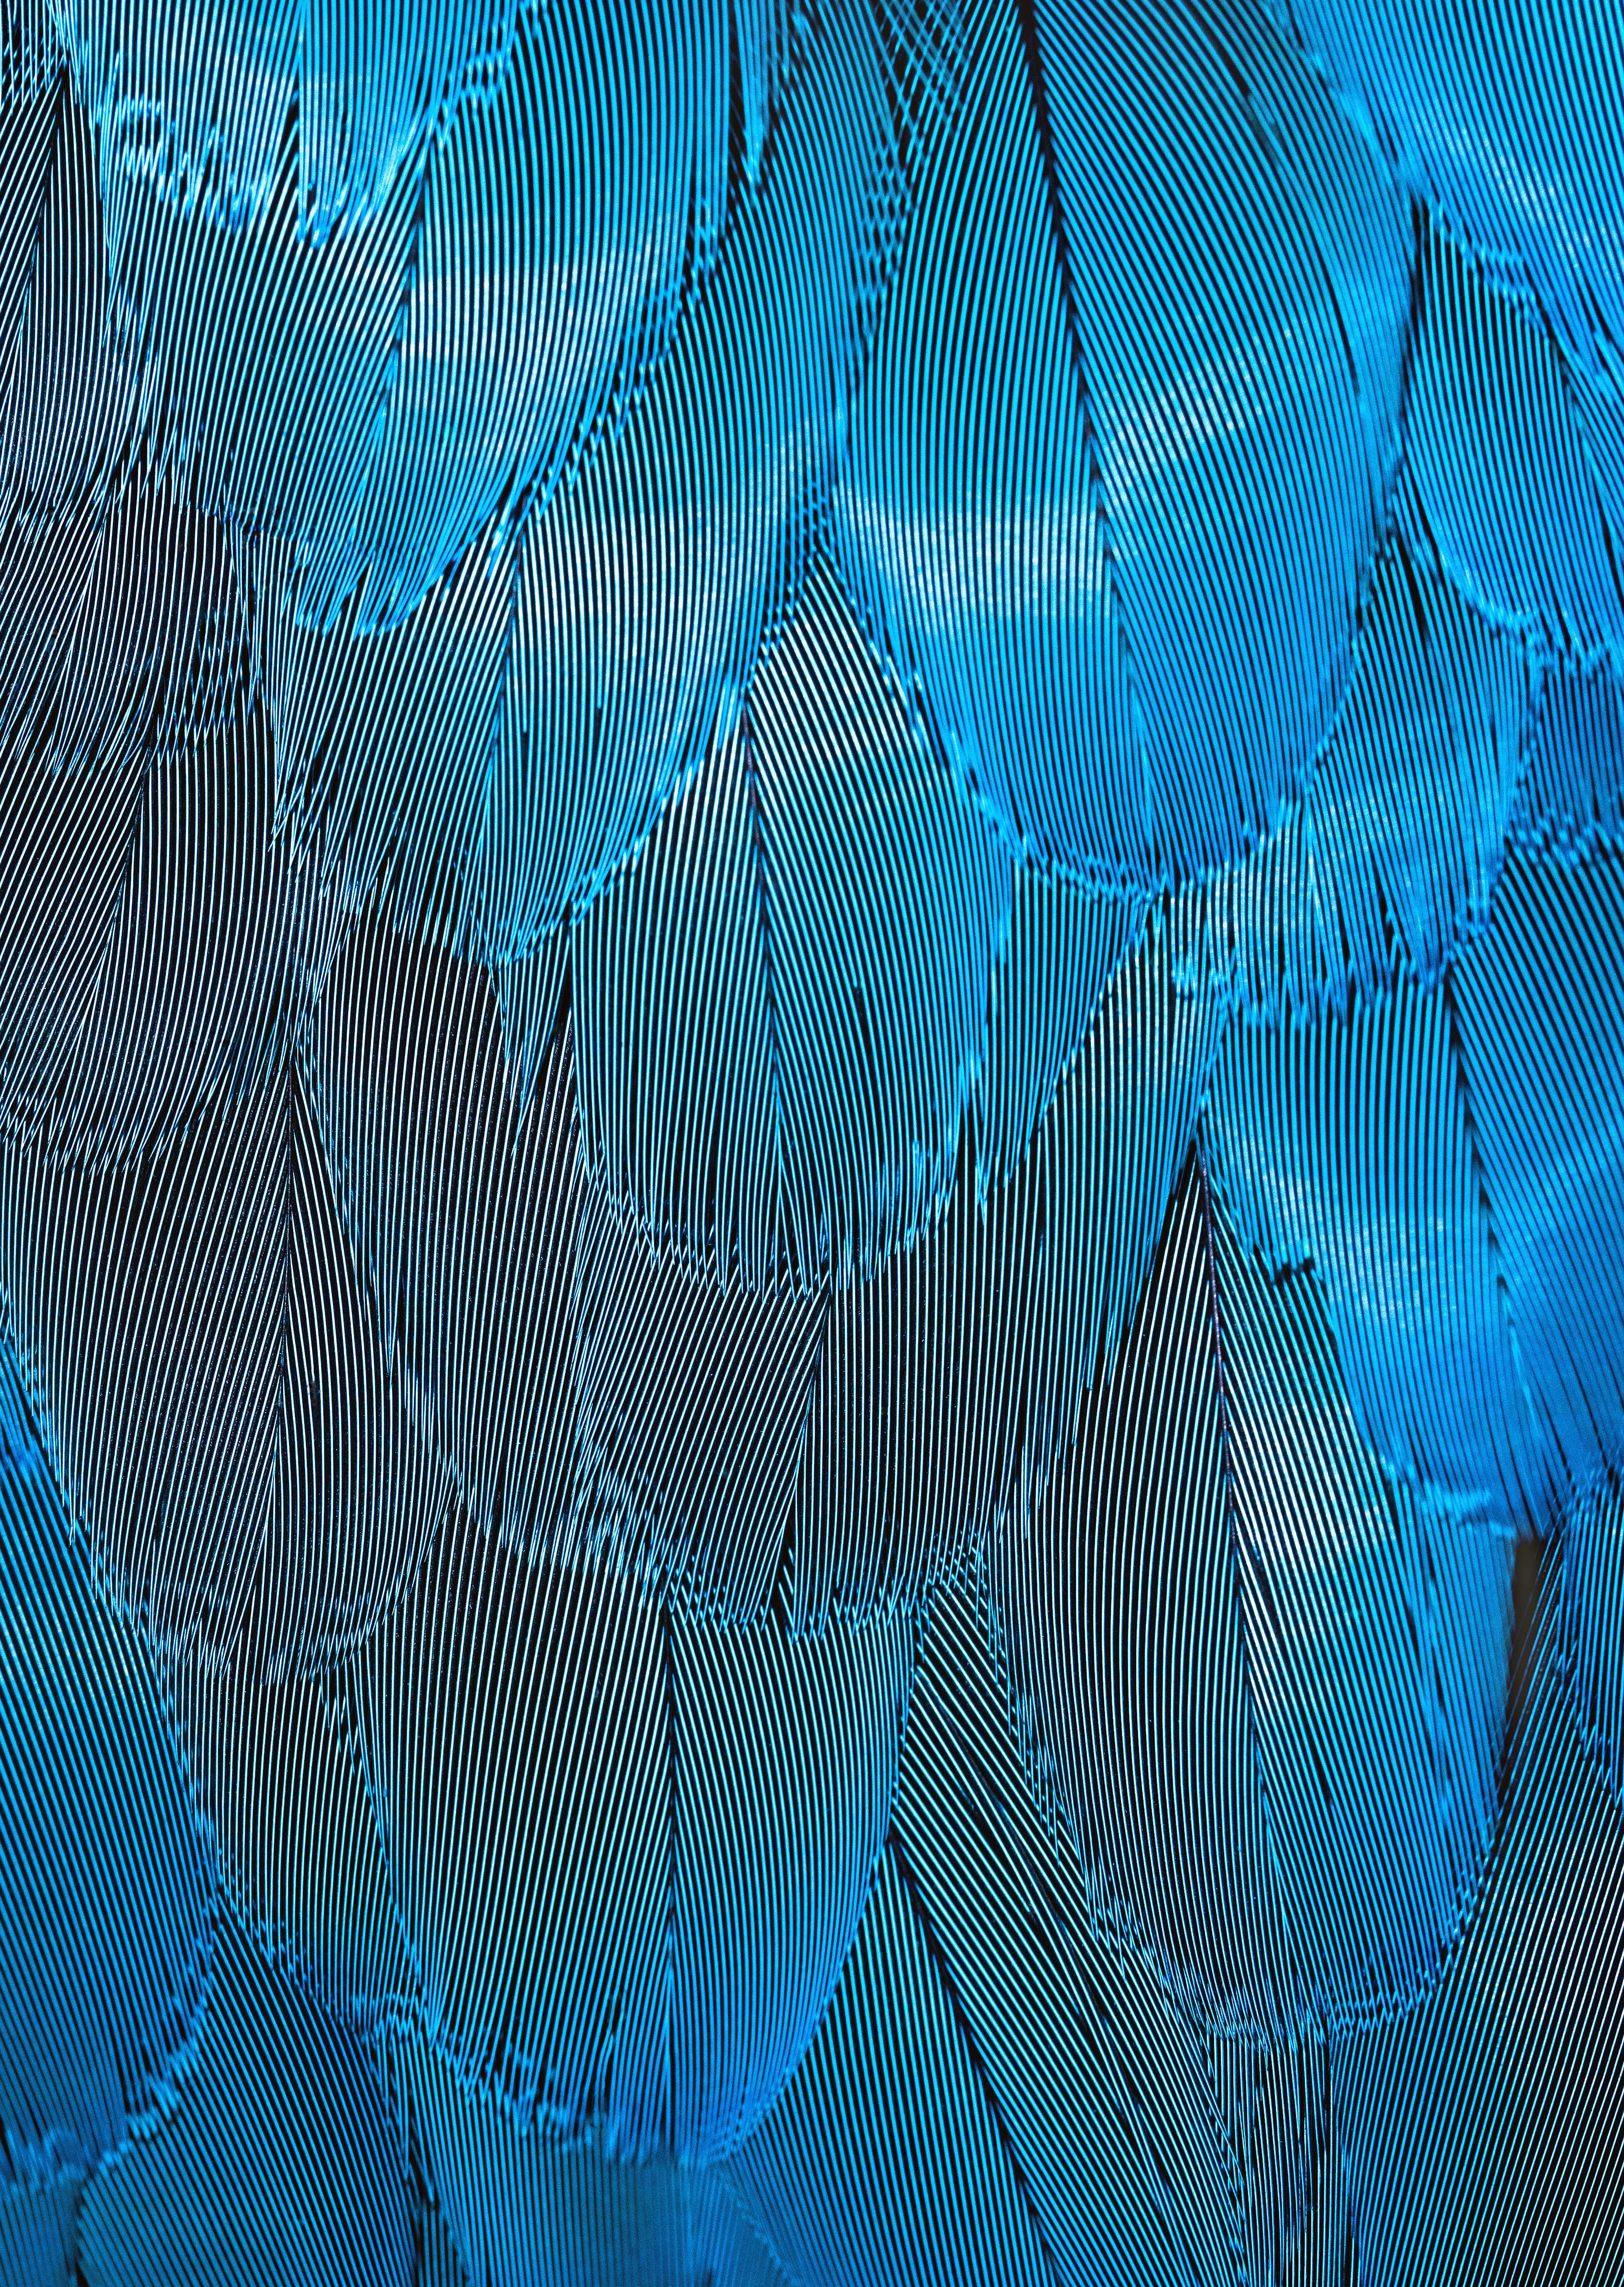 macro, textures, feather, blue, texture, iridescent Full HD